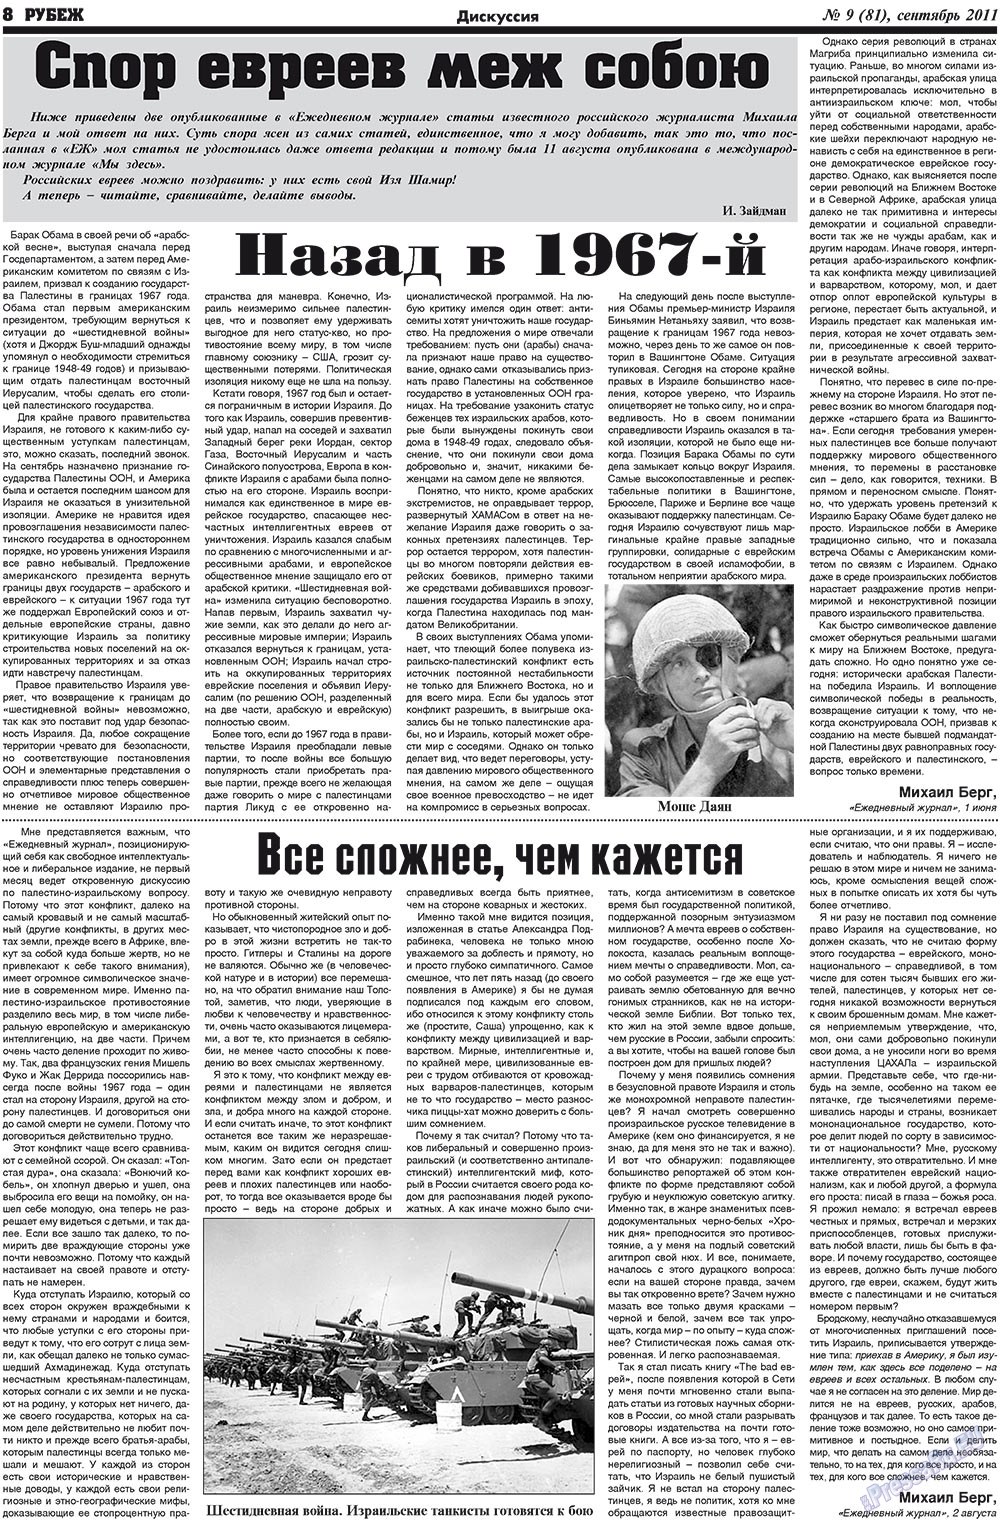 Рубеж, газета. 2011 №9 стр.8